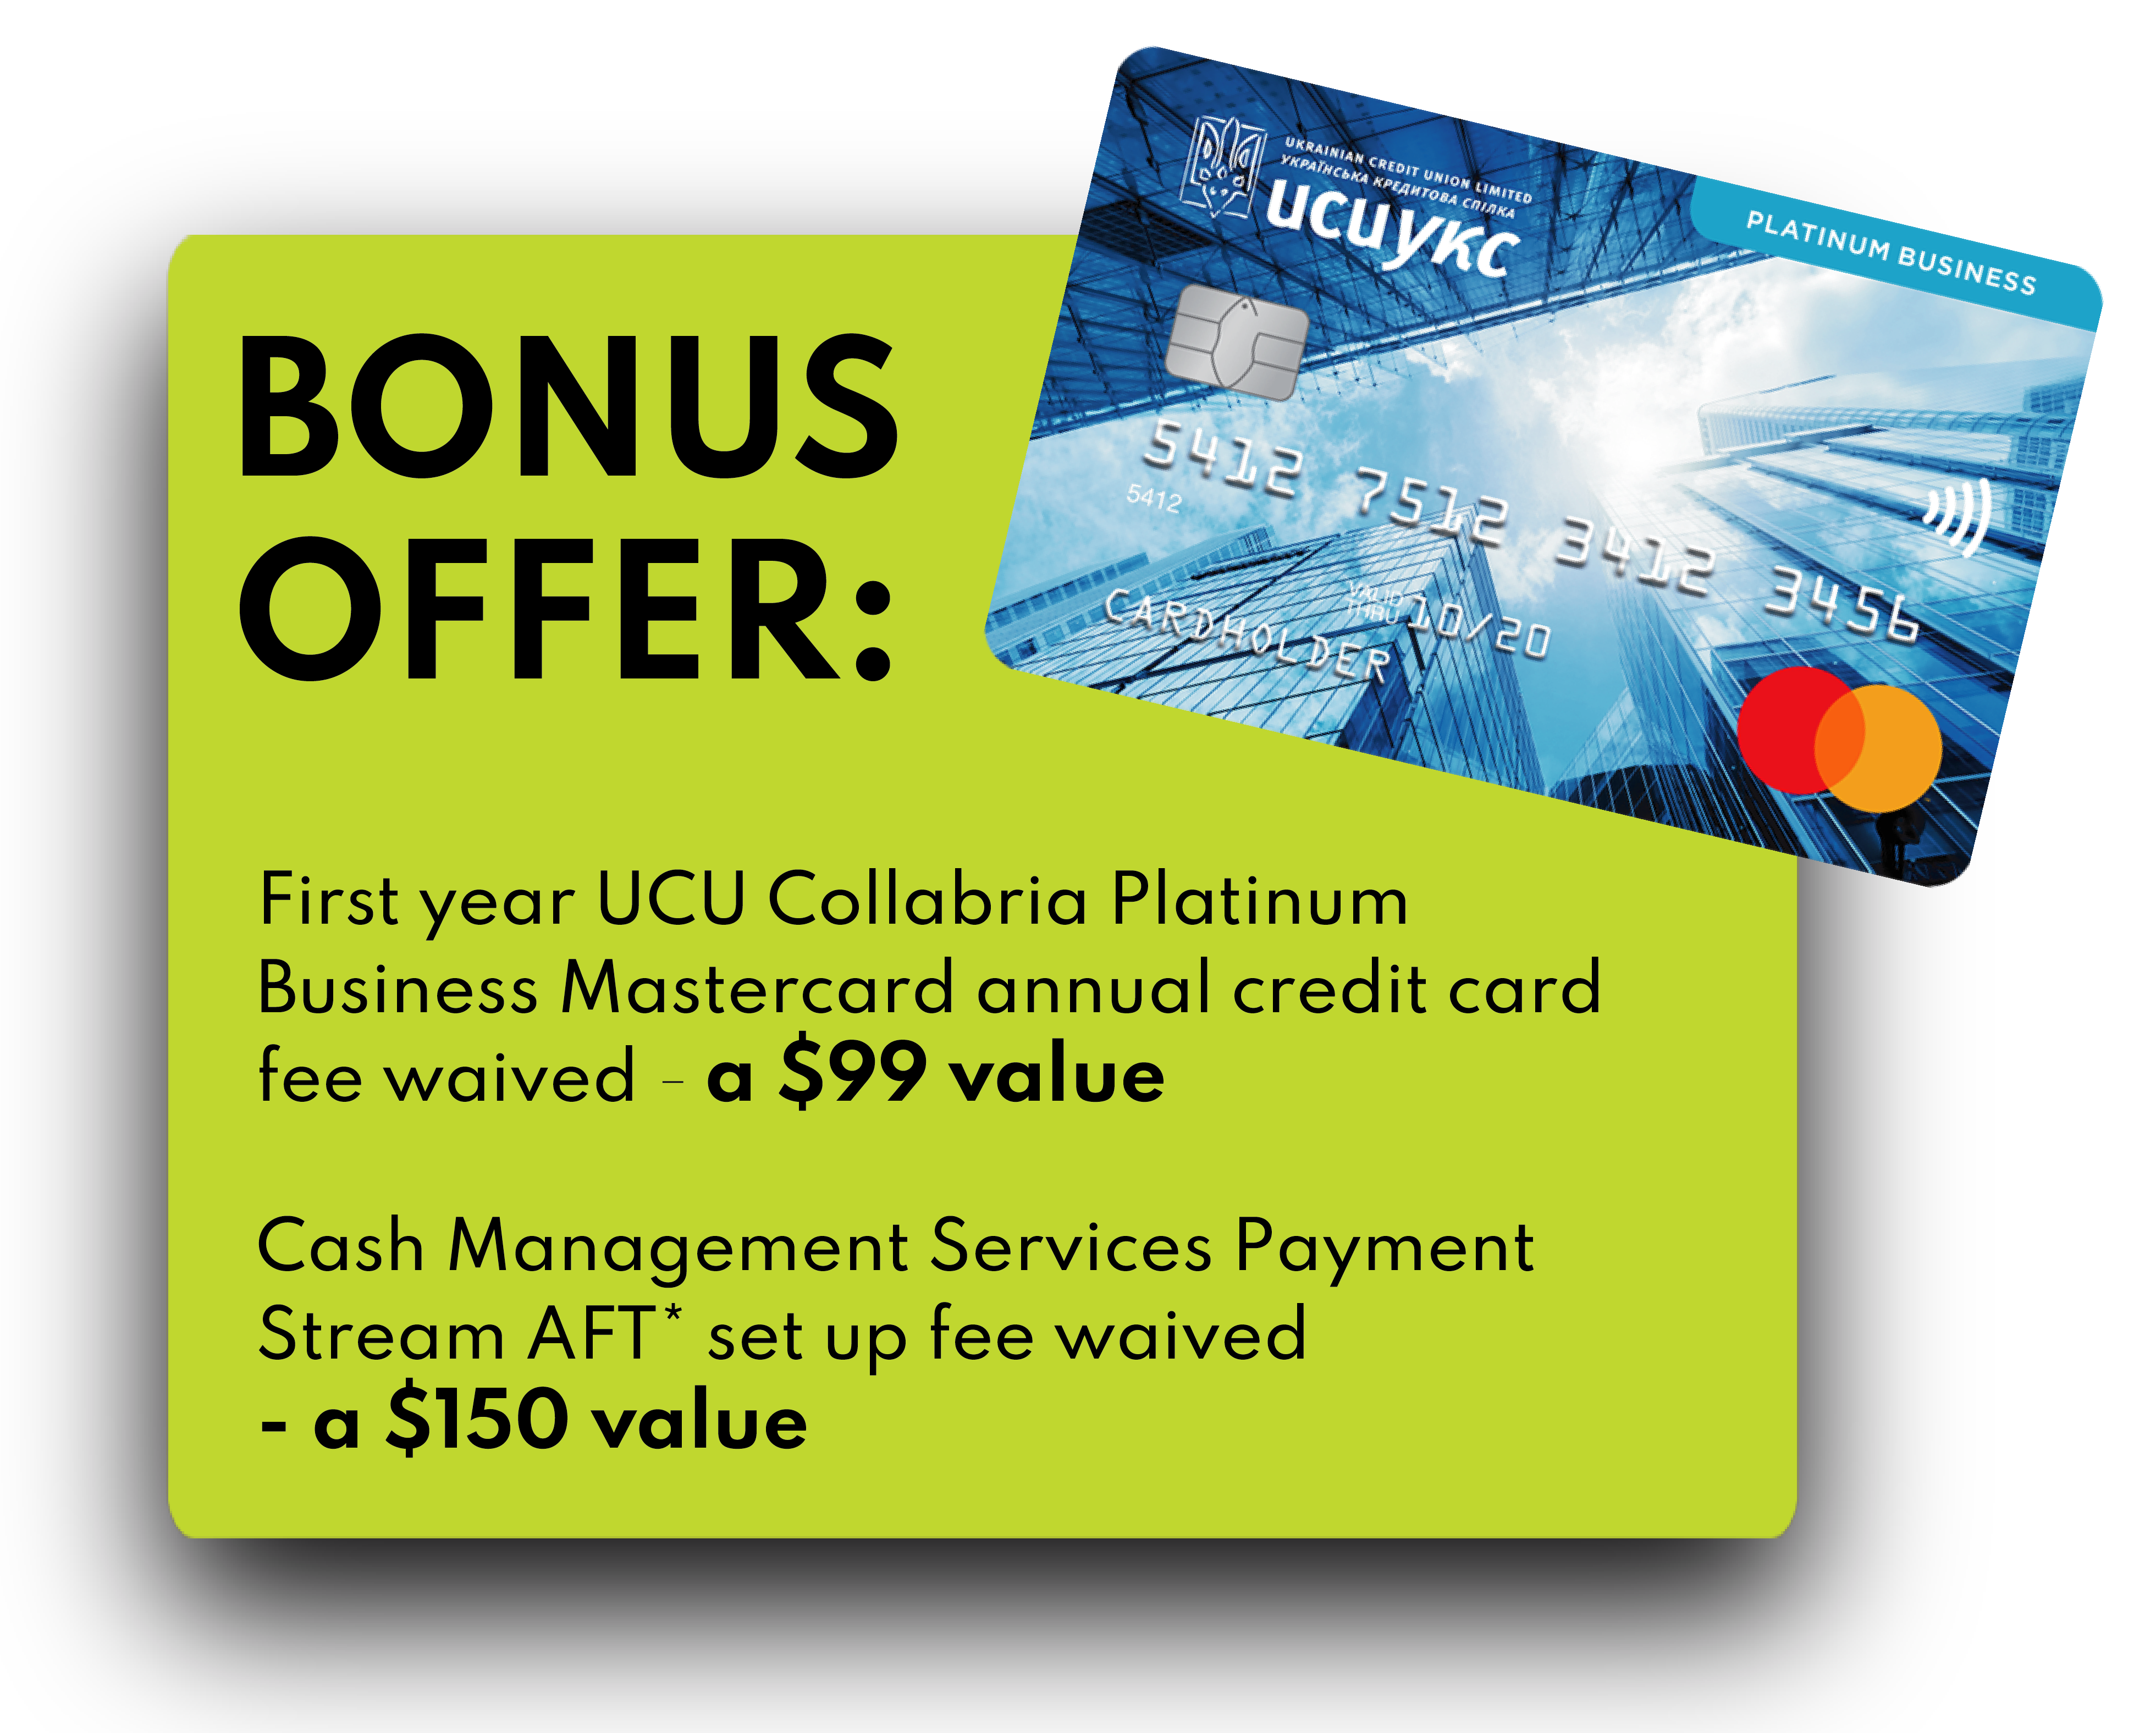 ucubiz Bonus Offer: First year annual credit card fee waived